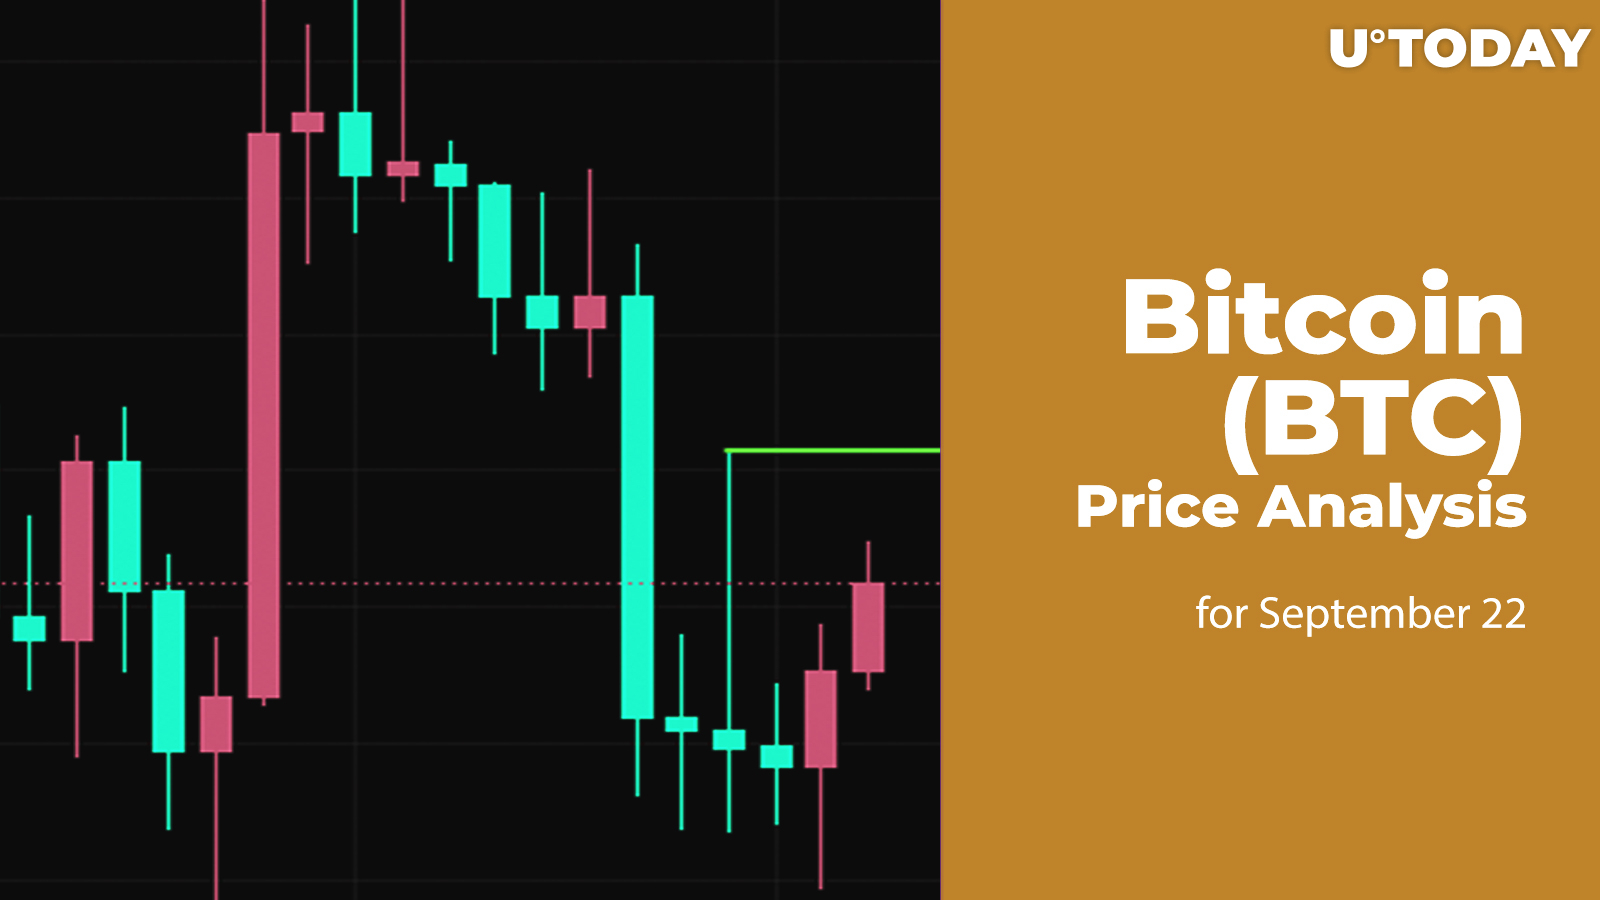 Bitcoin (BTC) Price Analysis for September 22